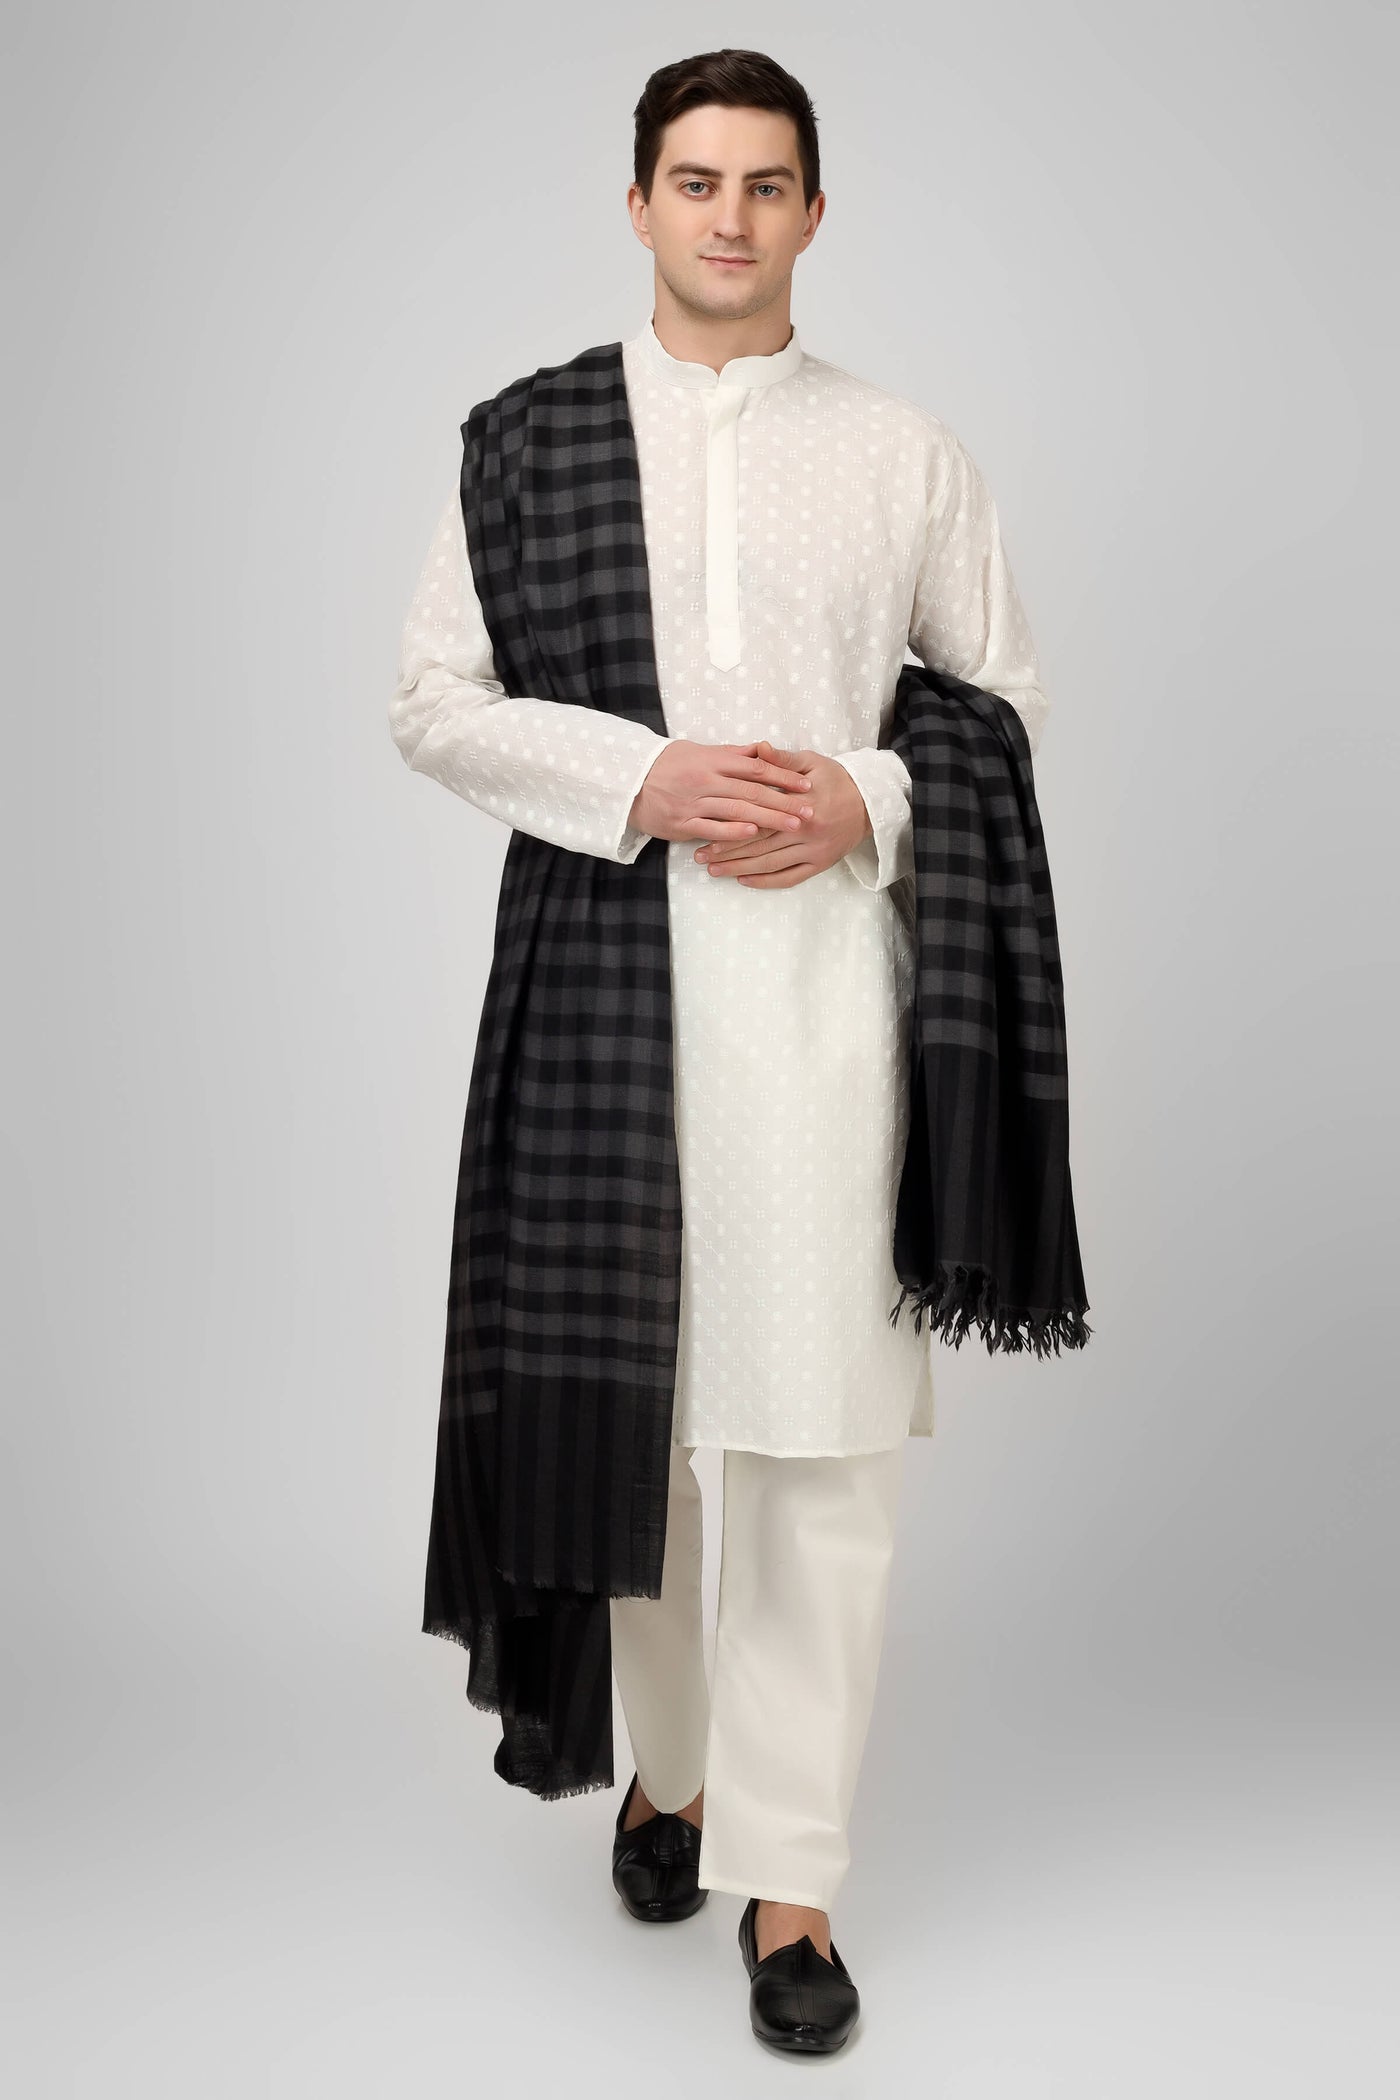 PASHMINA - DELHI-Black and gray Mens Pashmina  shawl checked design